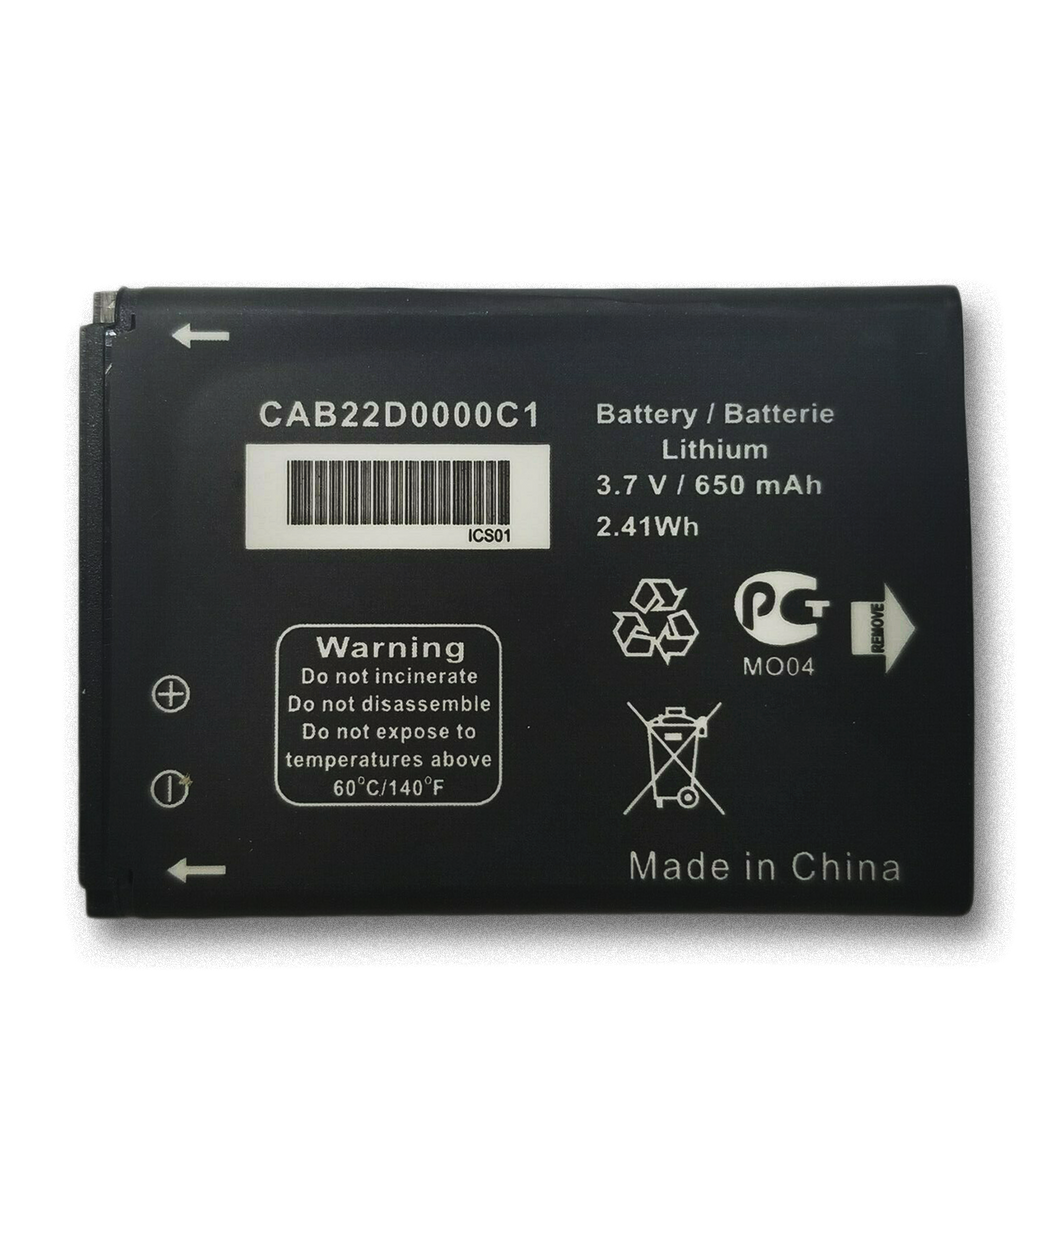 Replacement Battery for Alcatel 2010D CAB22D0000C1 CAB22B0000C1 OT-356 OT-665 650mAh